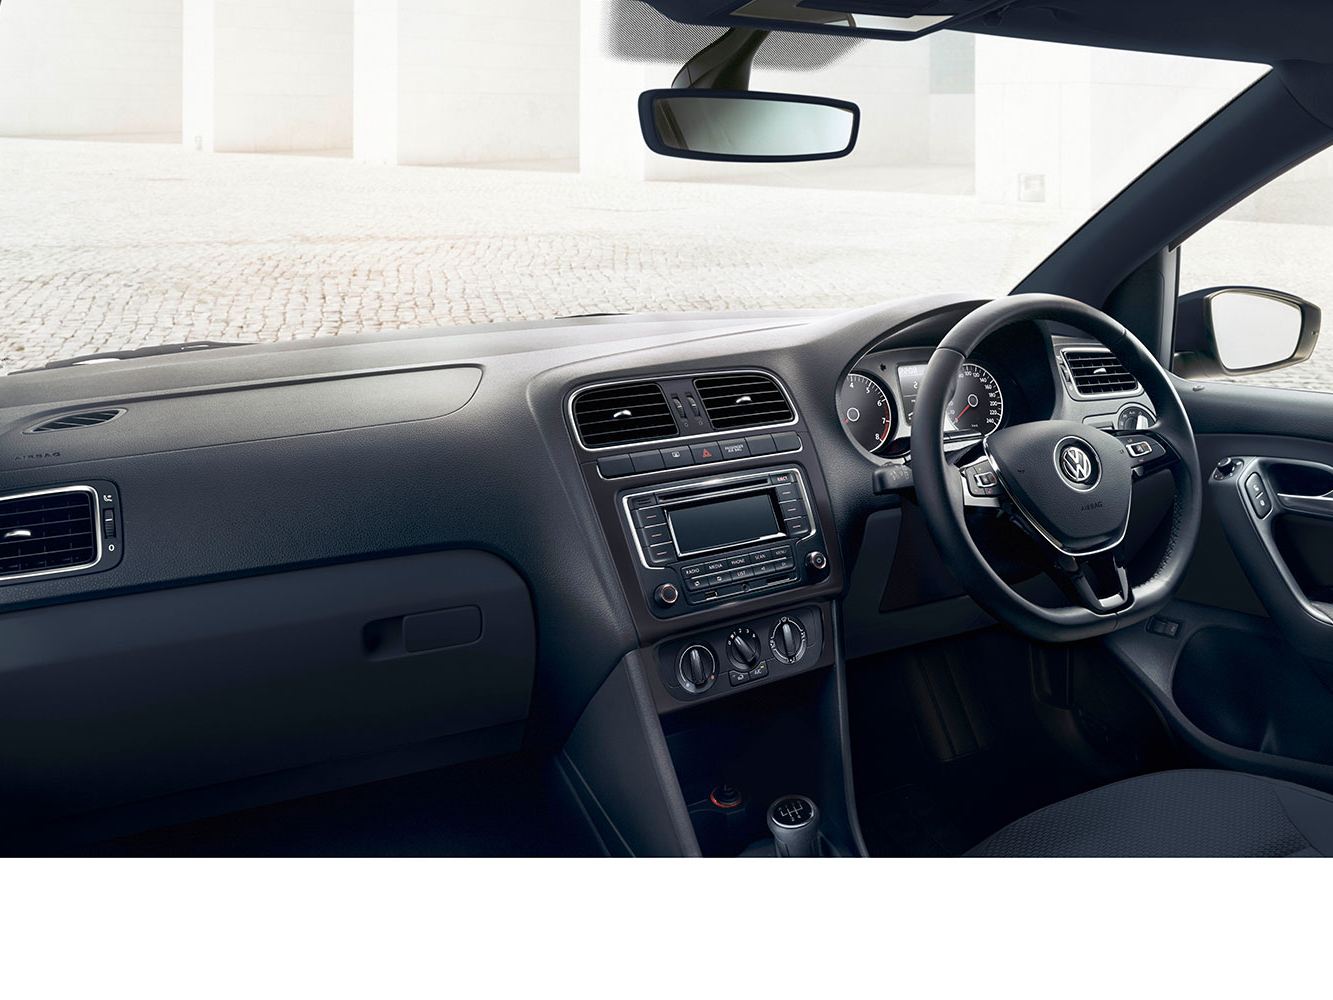 VW Polo sedan interior